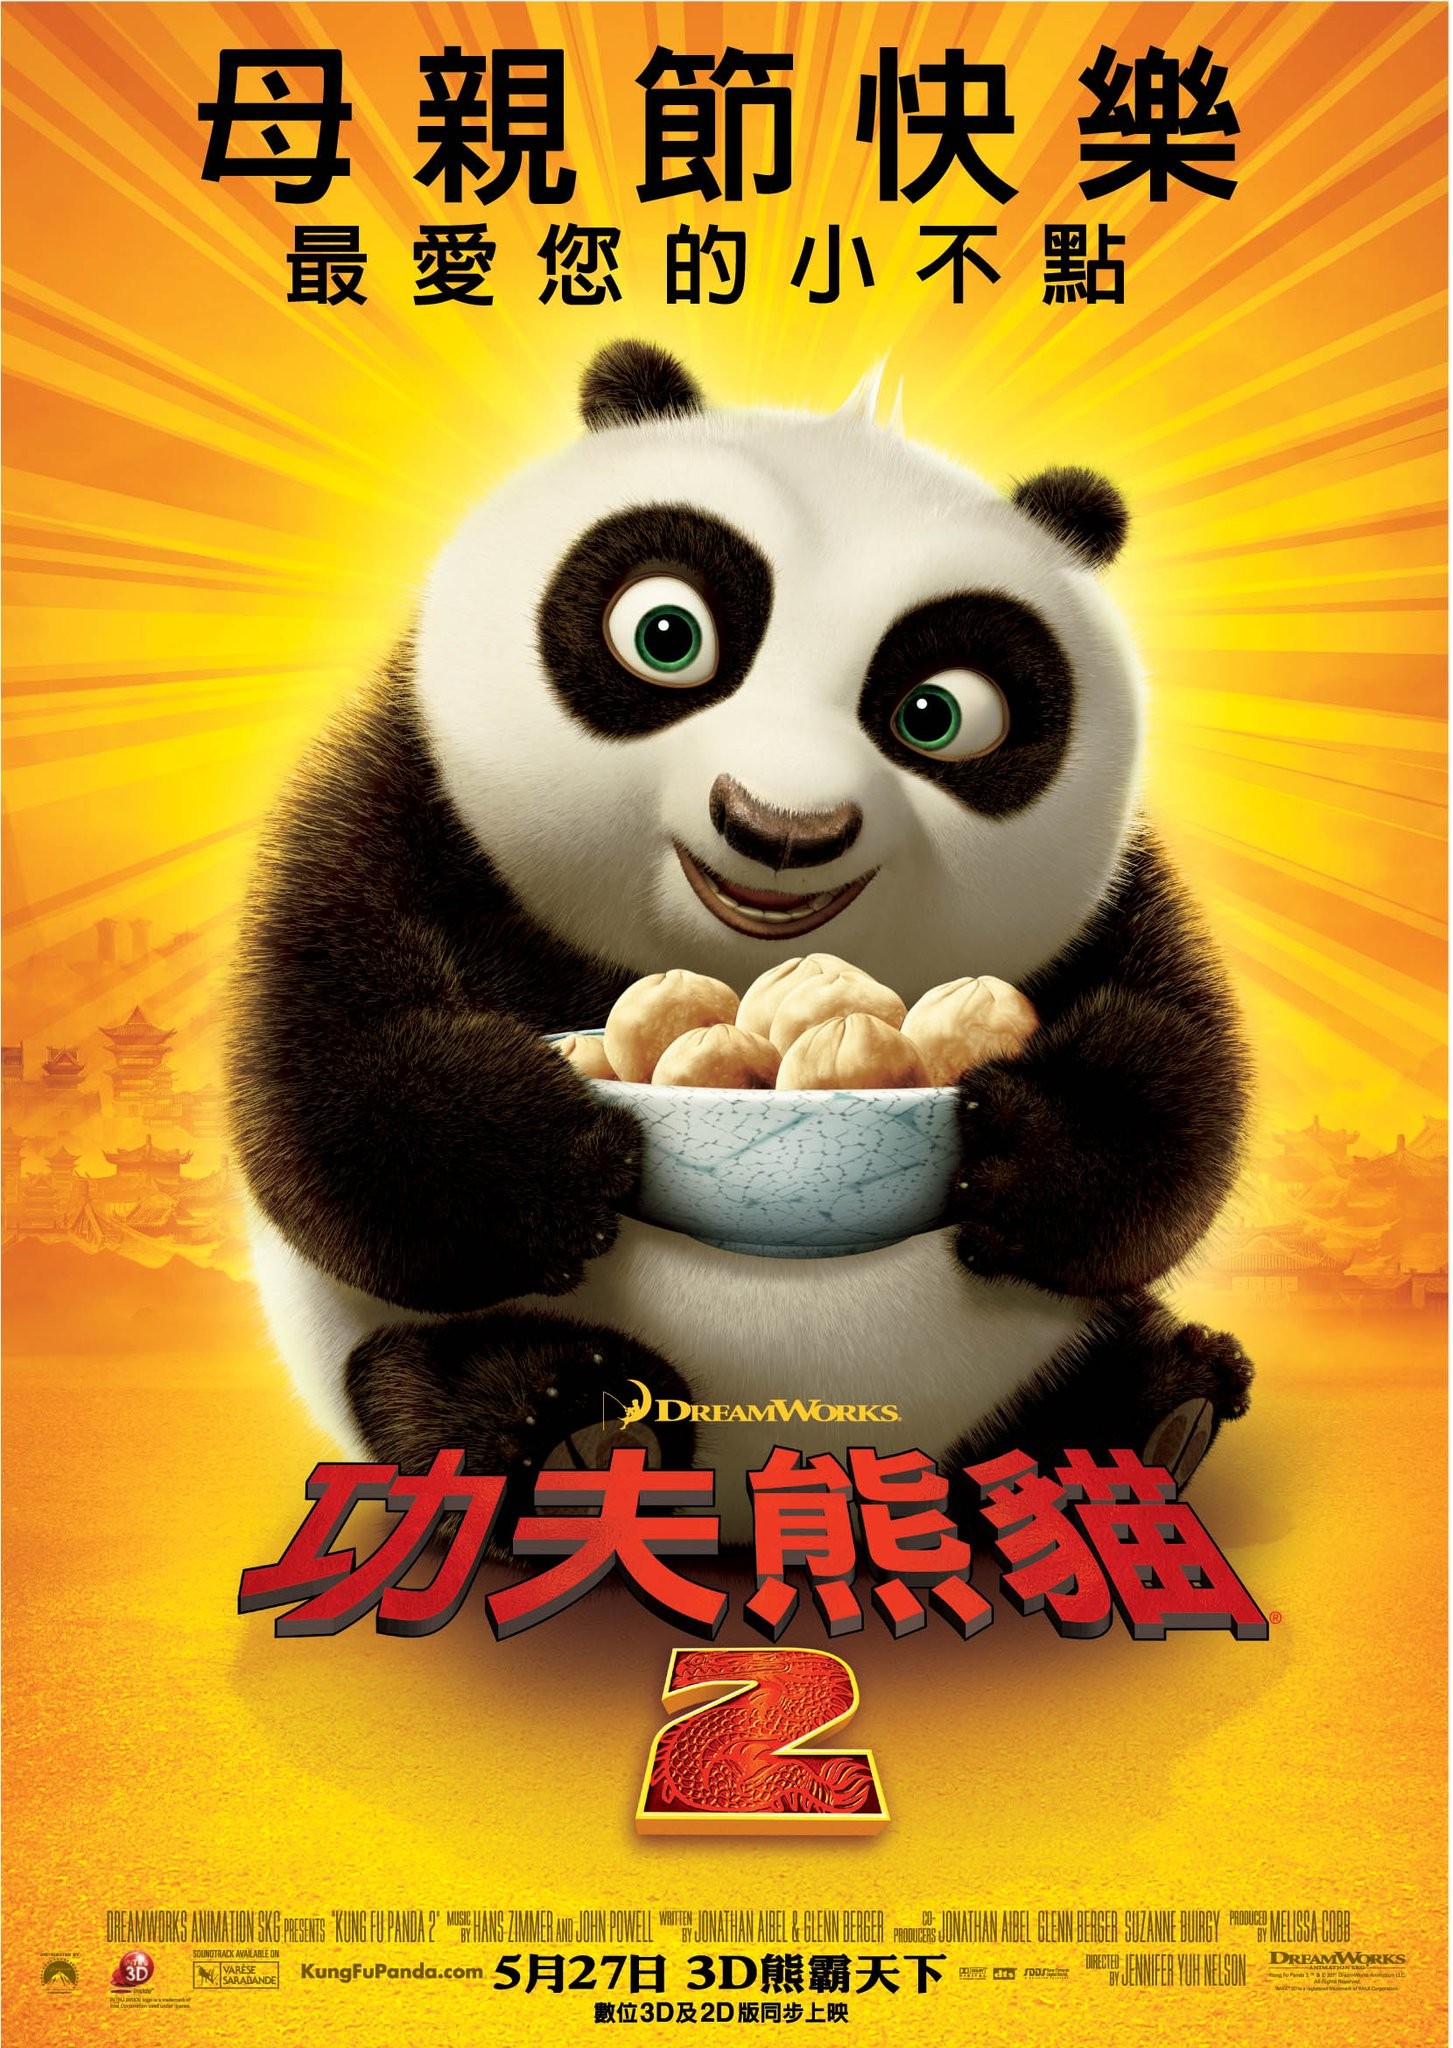 Mega Sized Movie Poster Image for Kung Fu Panda 2 (#6 of 8)